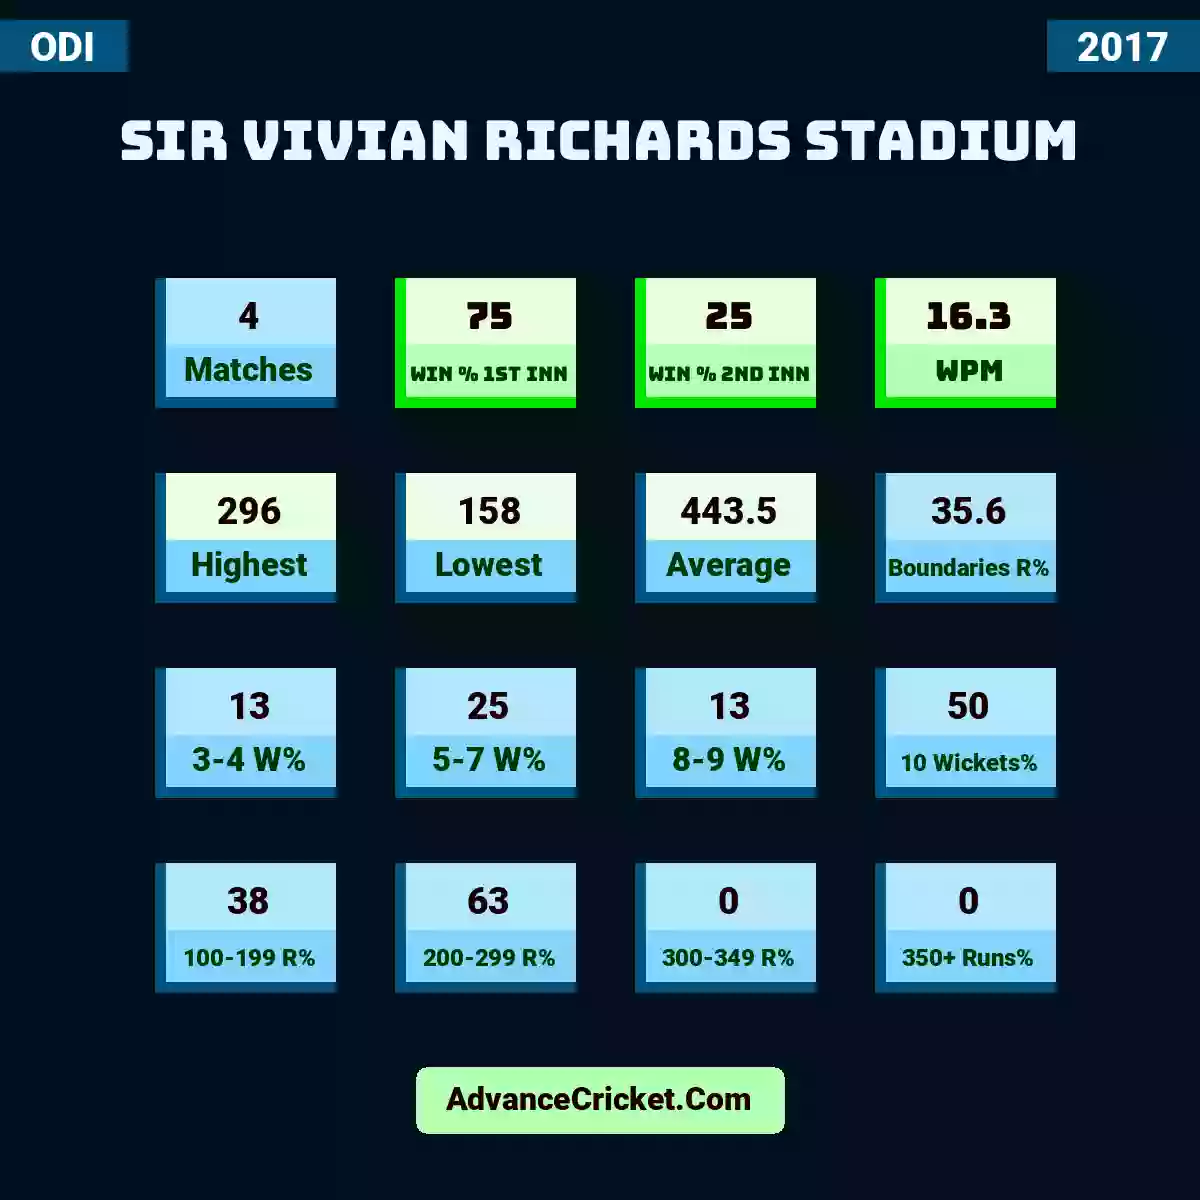 Image showing Sir Vivian Richards Stadium with Matches: 4, Win % 1st Inn: 75, Win % 2nd Inn: 25, WPM: 16.3, Highest: 296, Lowest: 158, Average: 443.5, Boundaries R%: 35.6, 3-4 W%: 13, 5-7 W%: 25, 8-9 W%: 13, 10 Wickets%: 50, 100-199 R%: 38, 200-299 R%: 63, 300-349 R%: 0, 350+ Runs%: 0.